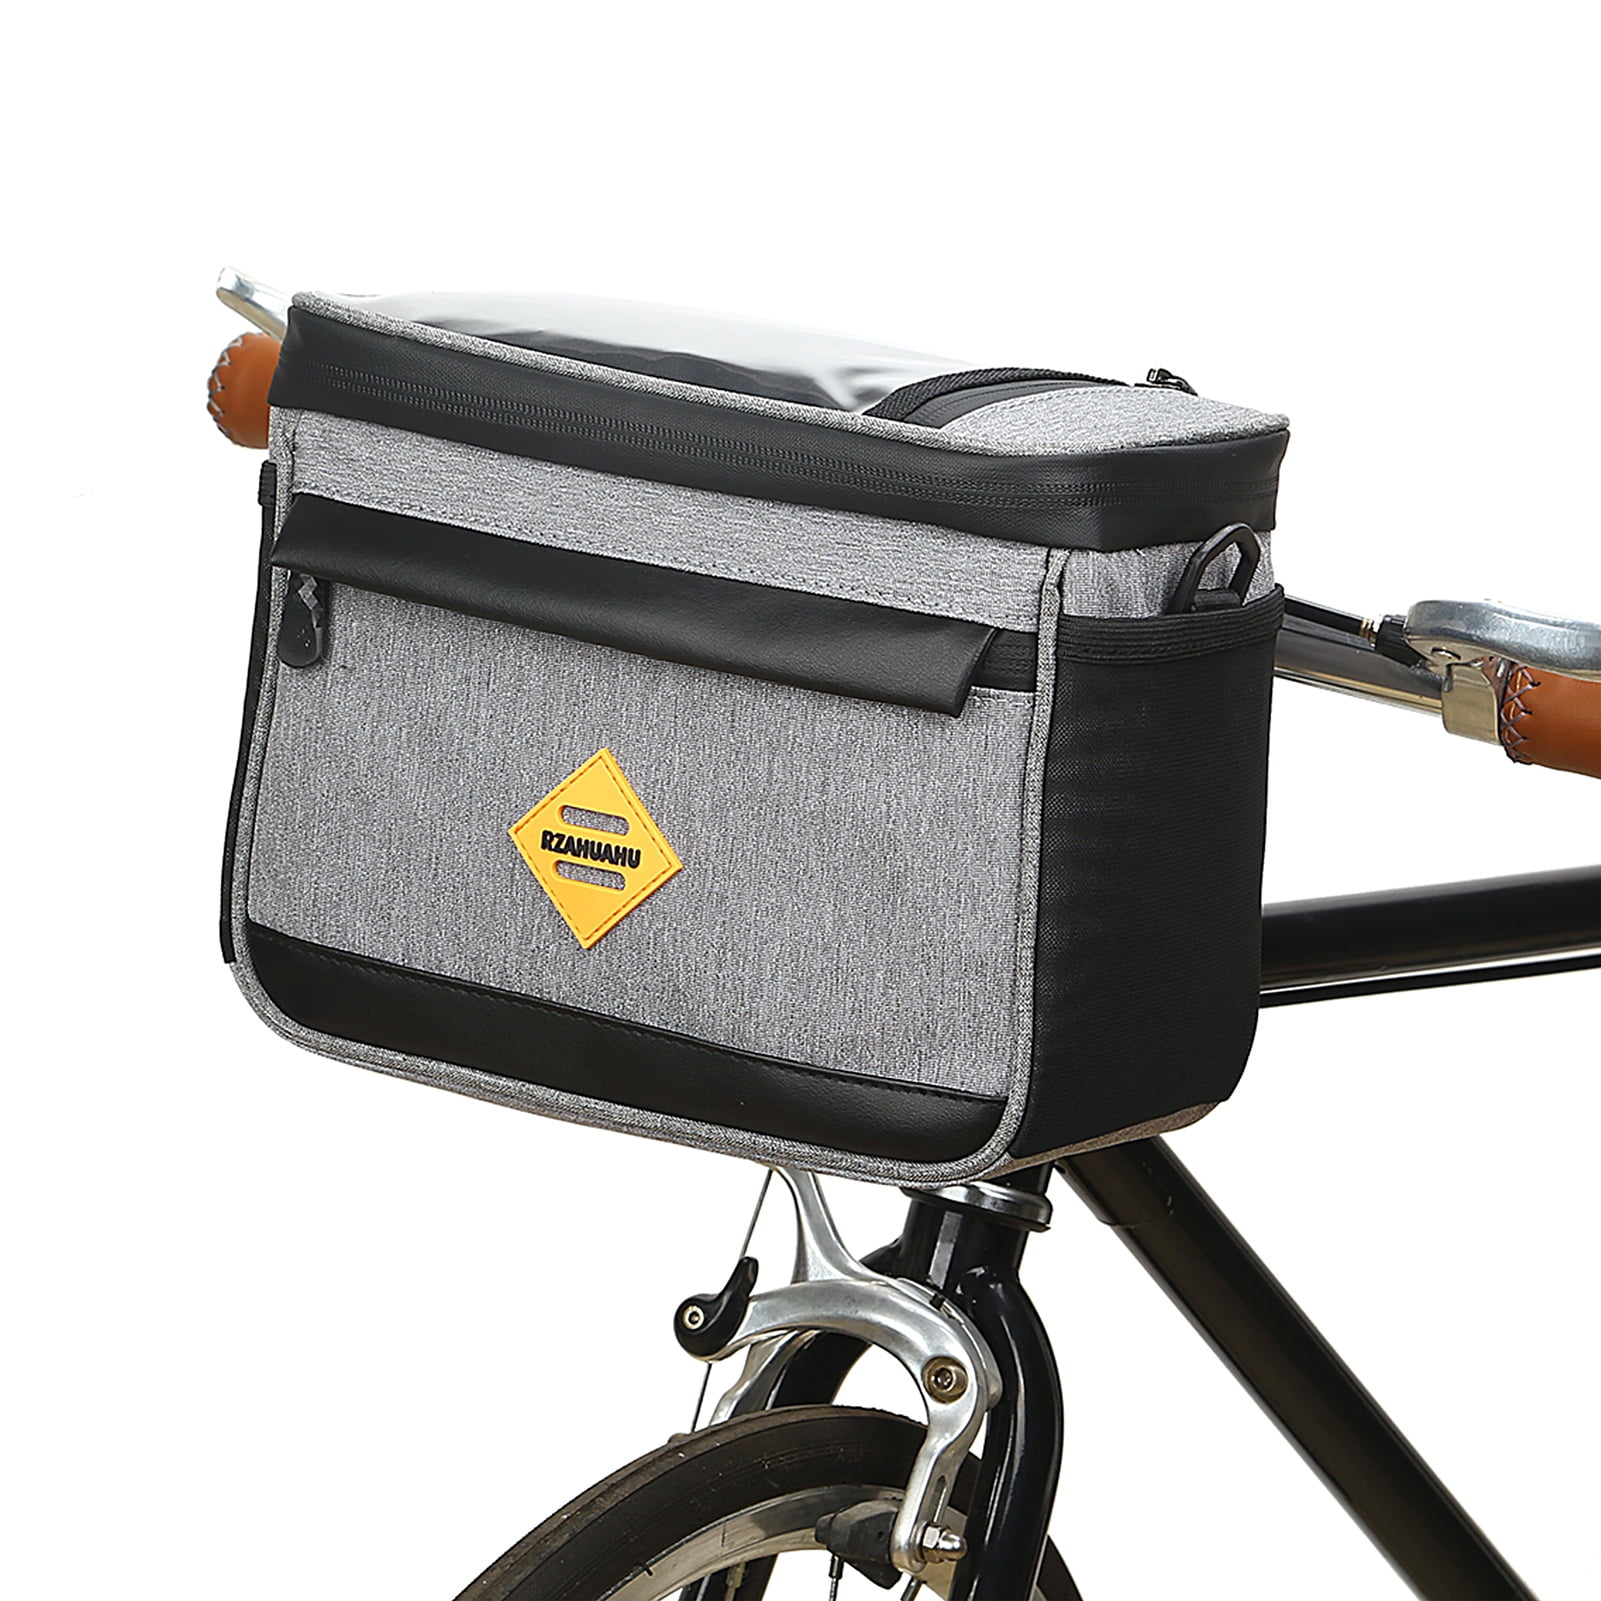 KlickFix Bike bag accessories Box and basket mount